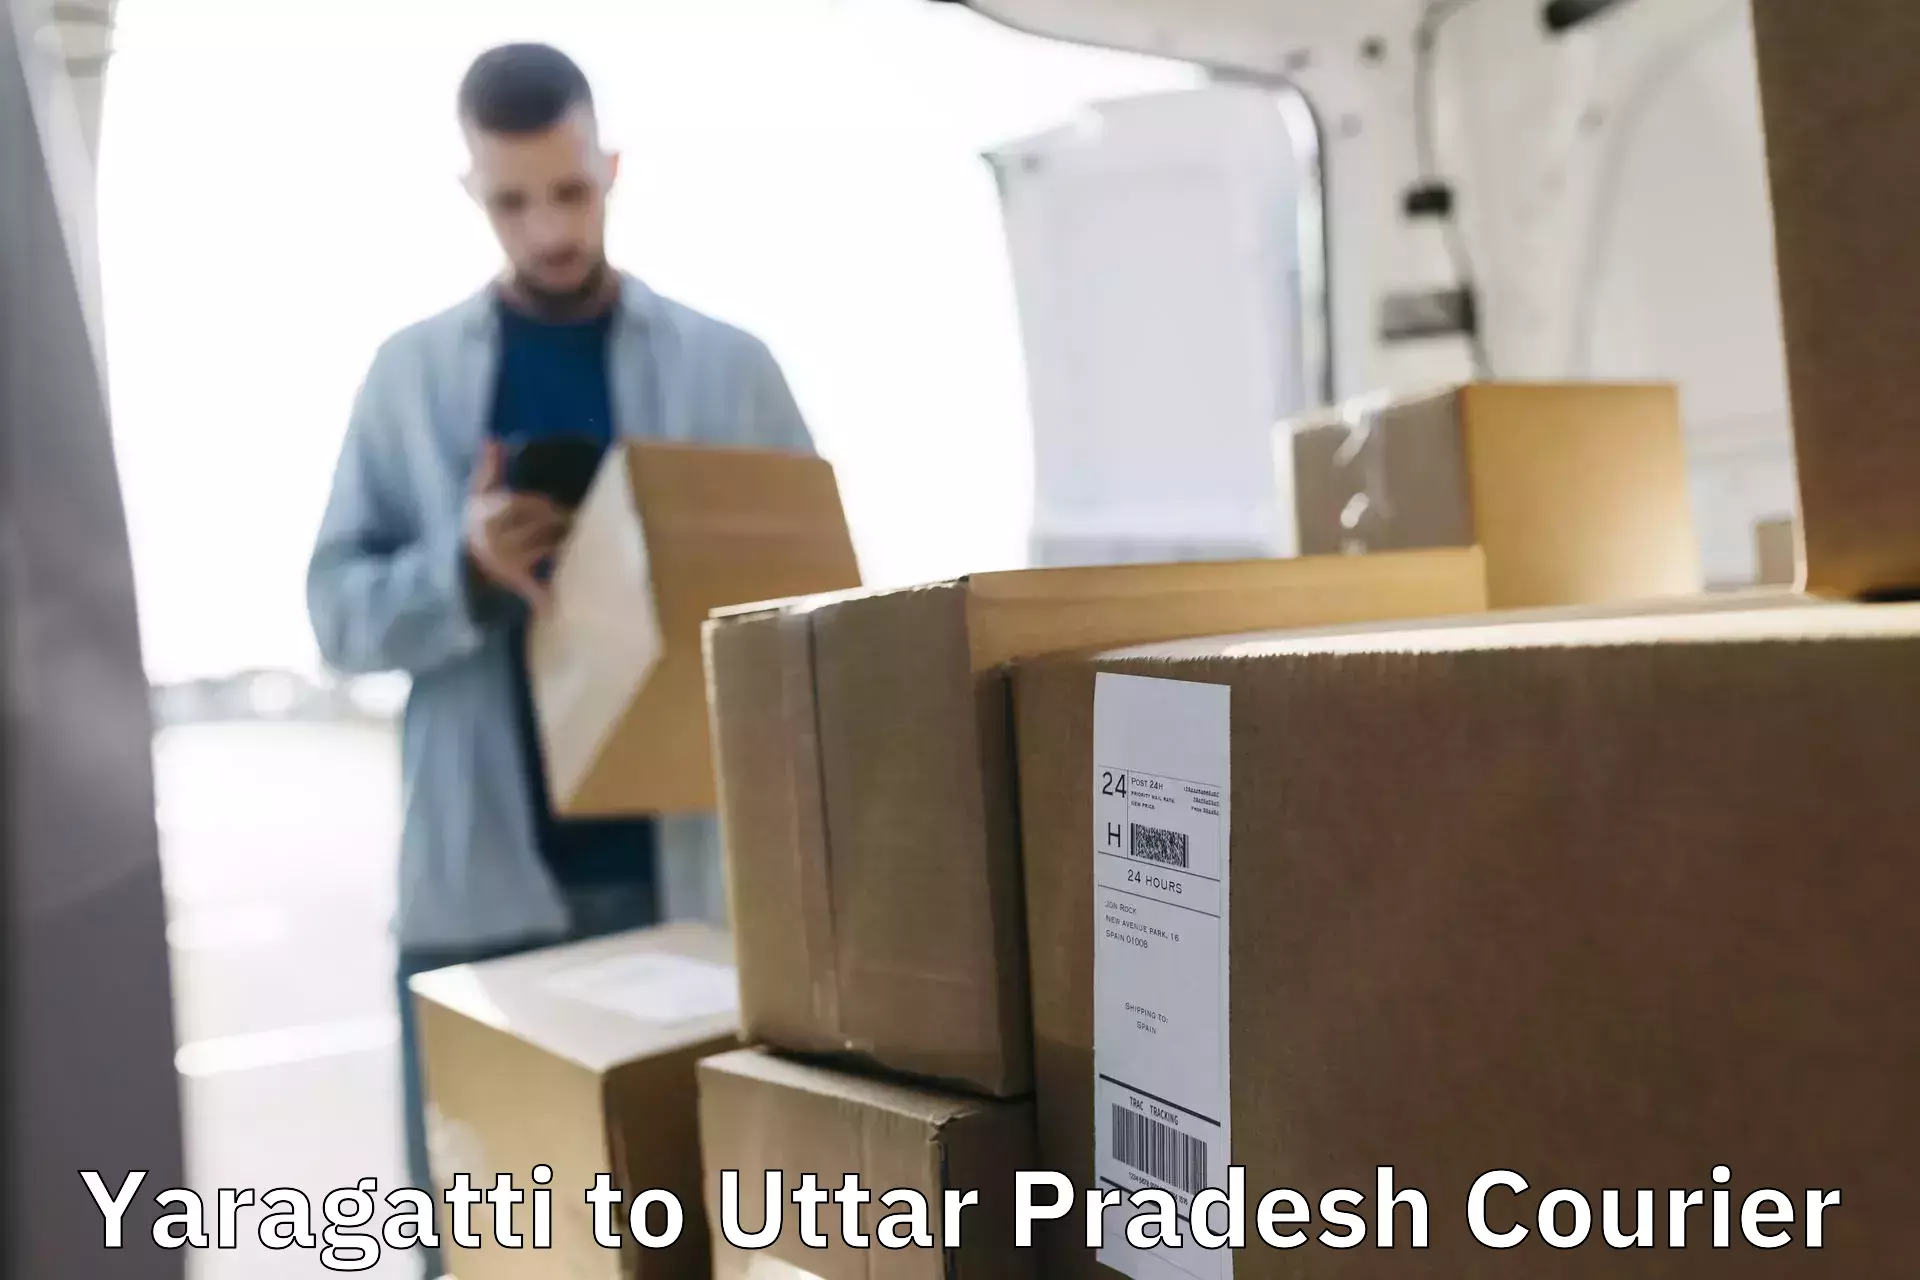 Global logistics network Yaragatti to Uttar Pradesh